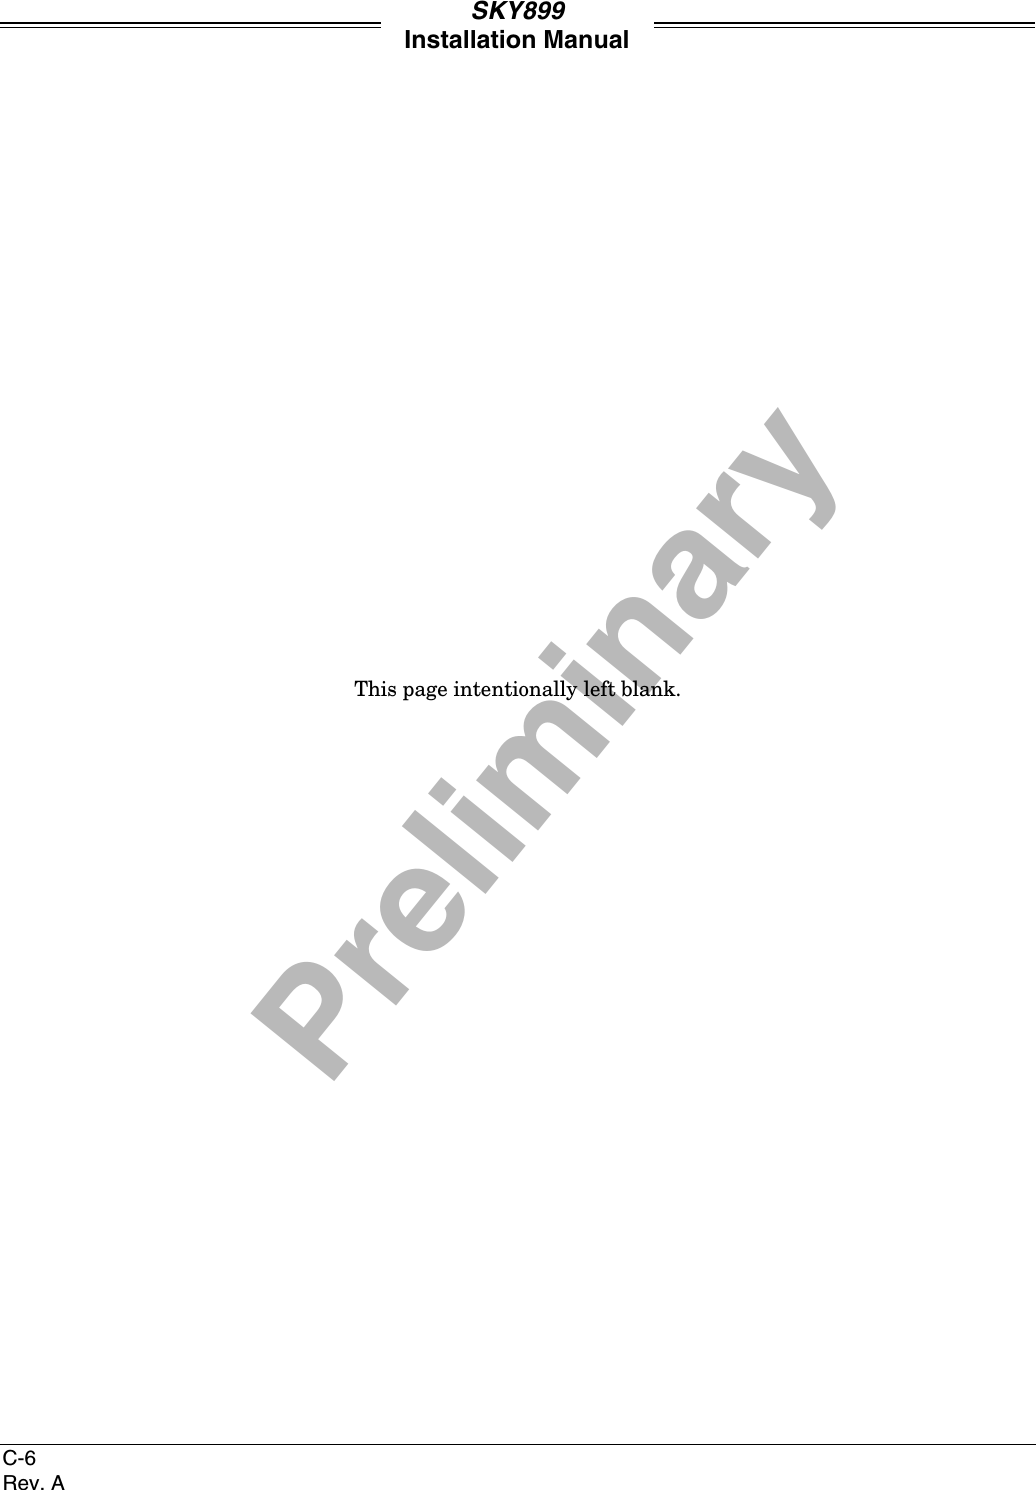 PreliminarySKY899Installation ManualC-6Rev. AThis page intentionally left blank.